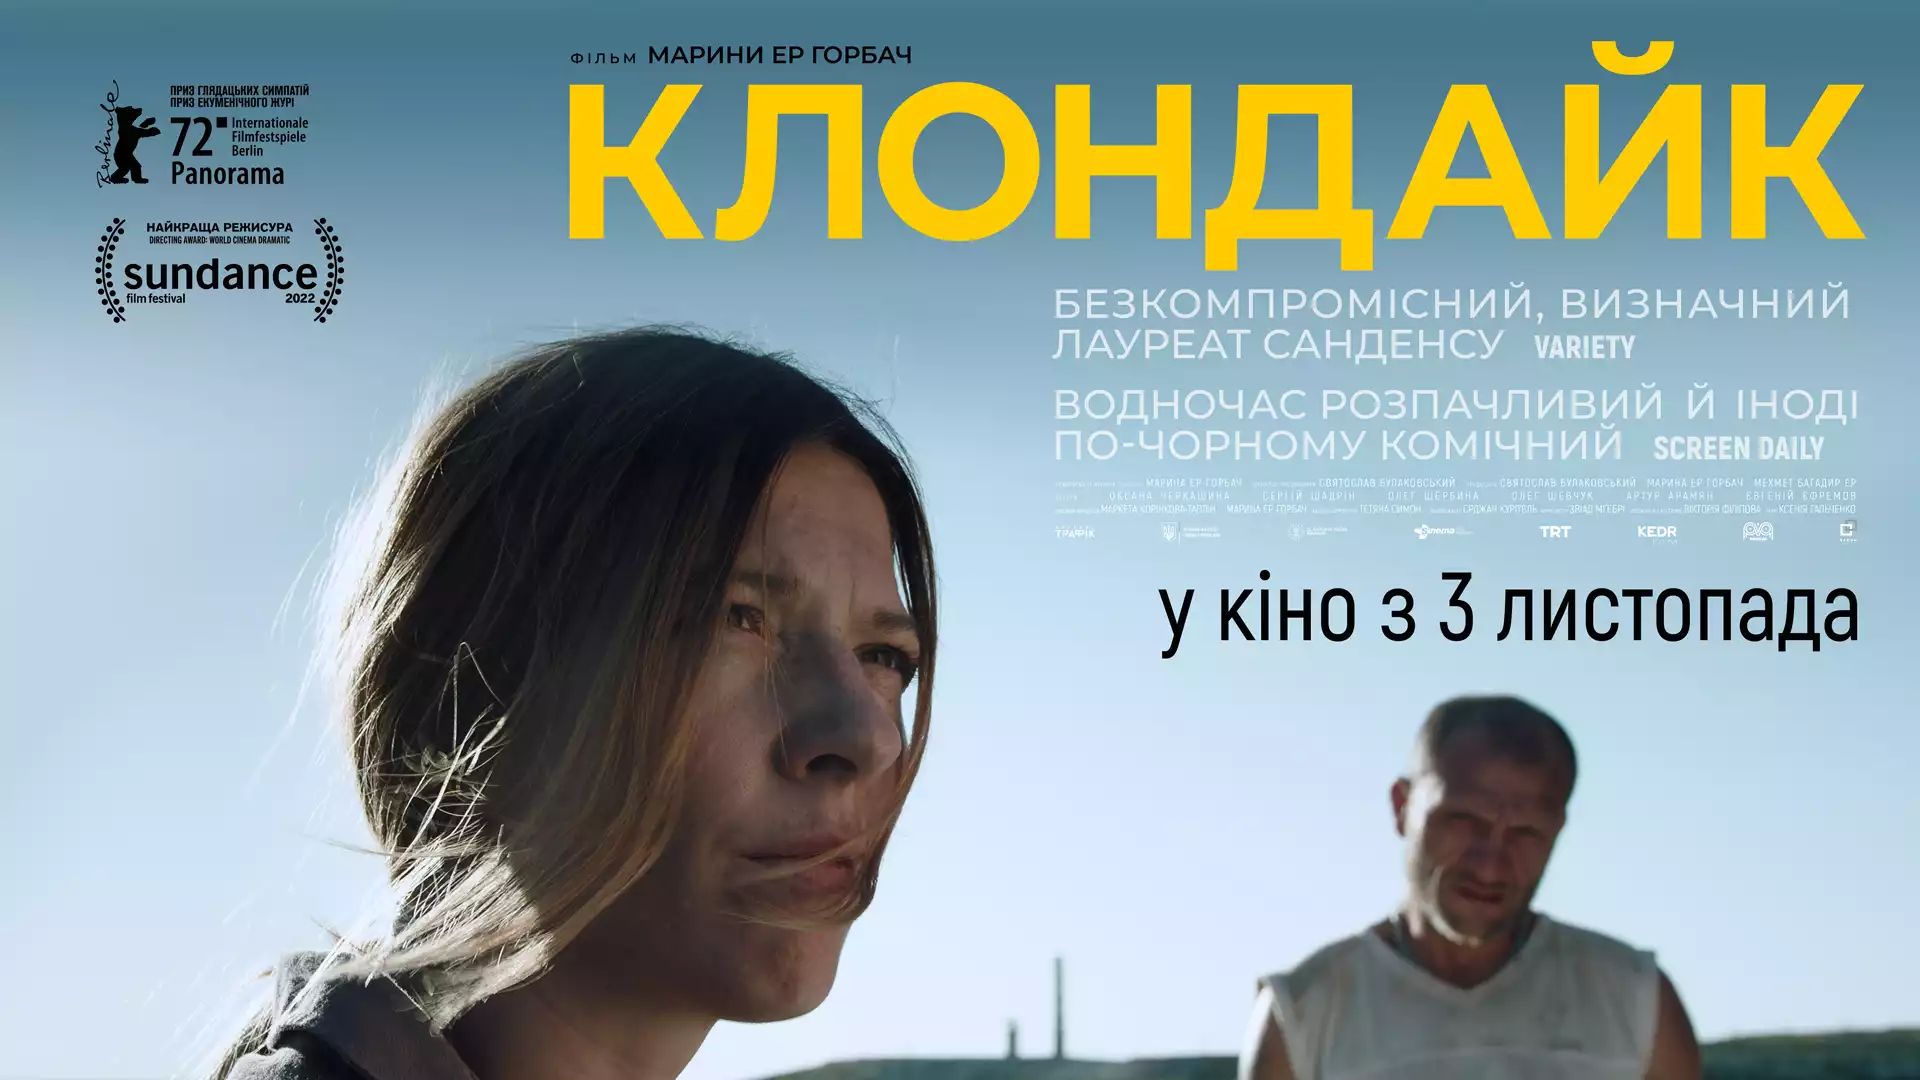 Фільм «Клондайк» виходить в український прокат